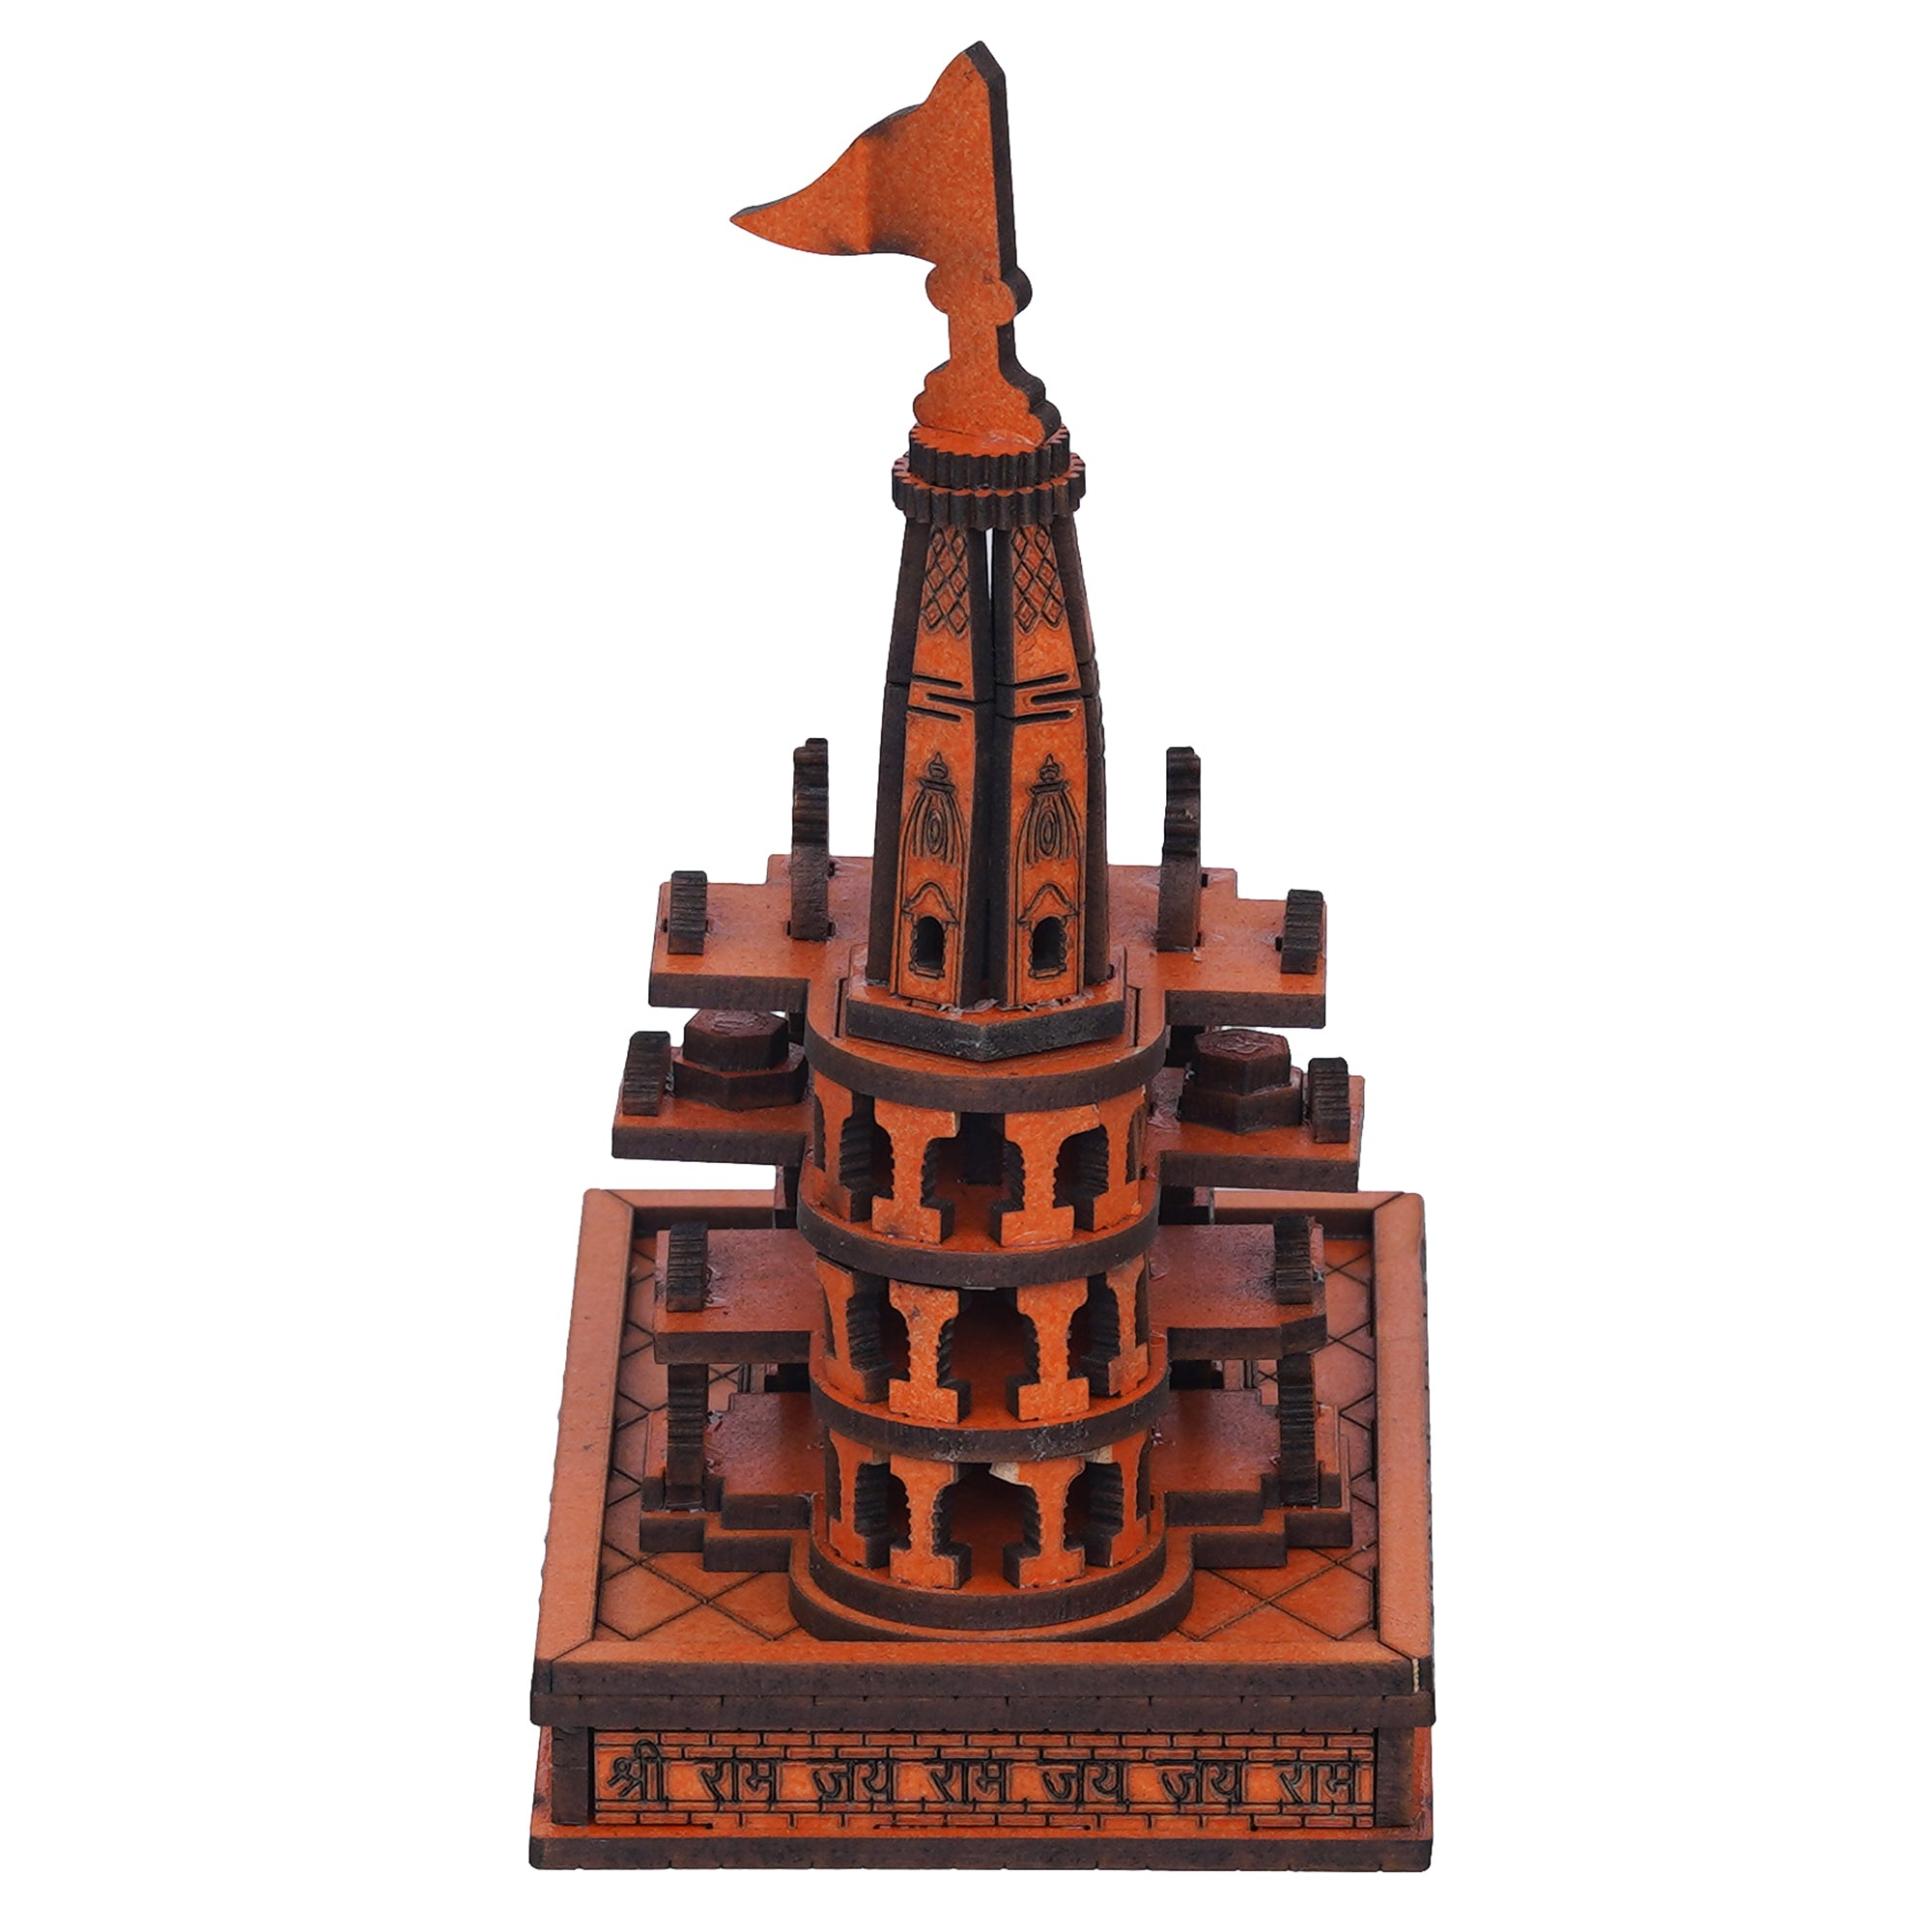 eCraftIndia Shri Ram Mandir Ayodhya Model - Wooden MDF Craftsmanship Authentic Designer Temple - Ideal for Home Temple, Decor, and Spiritual Gifting (Orange, Brown) 8